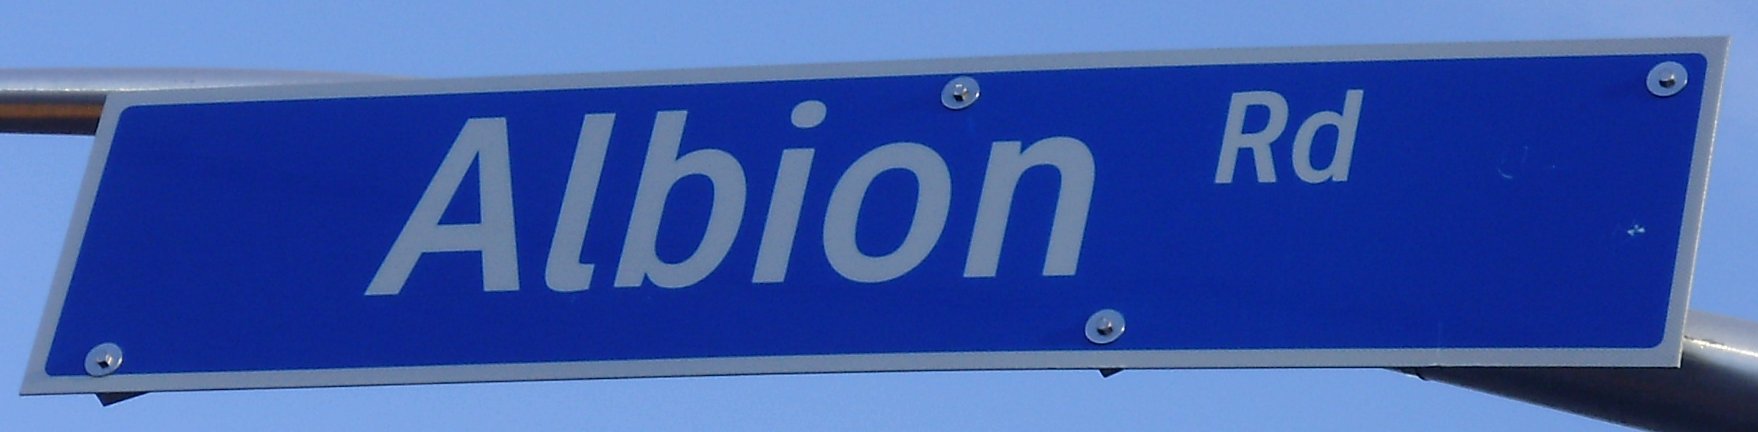 albion road